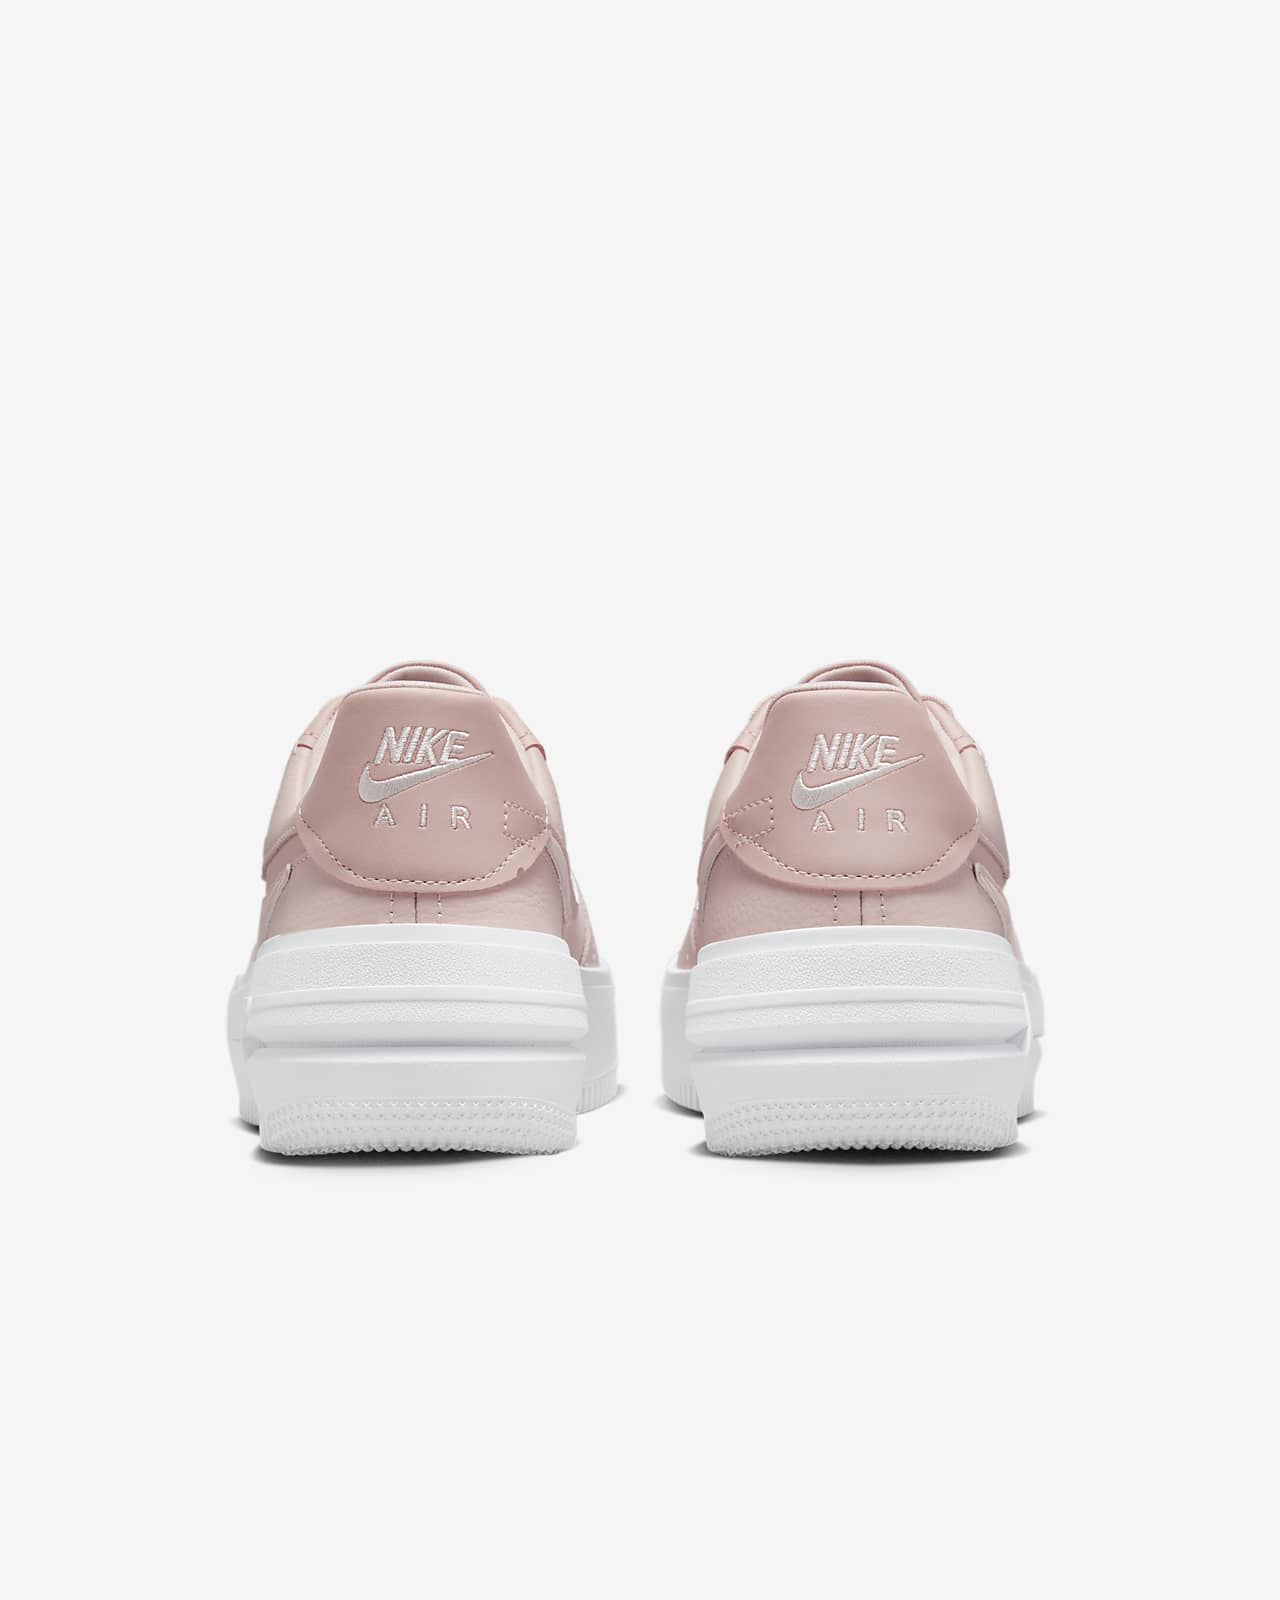 Nike Air Force 1 Pink Bag and White Bag Drop